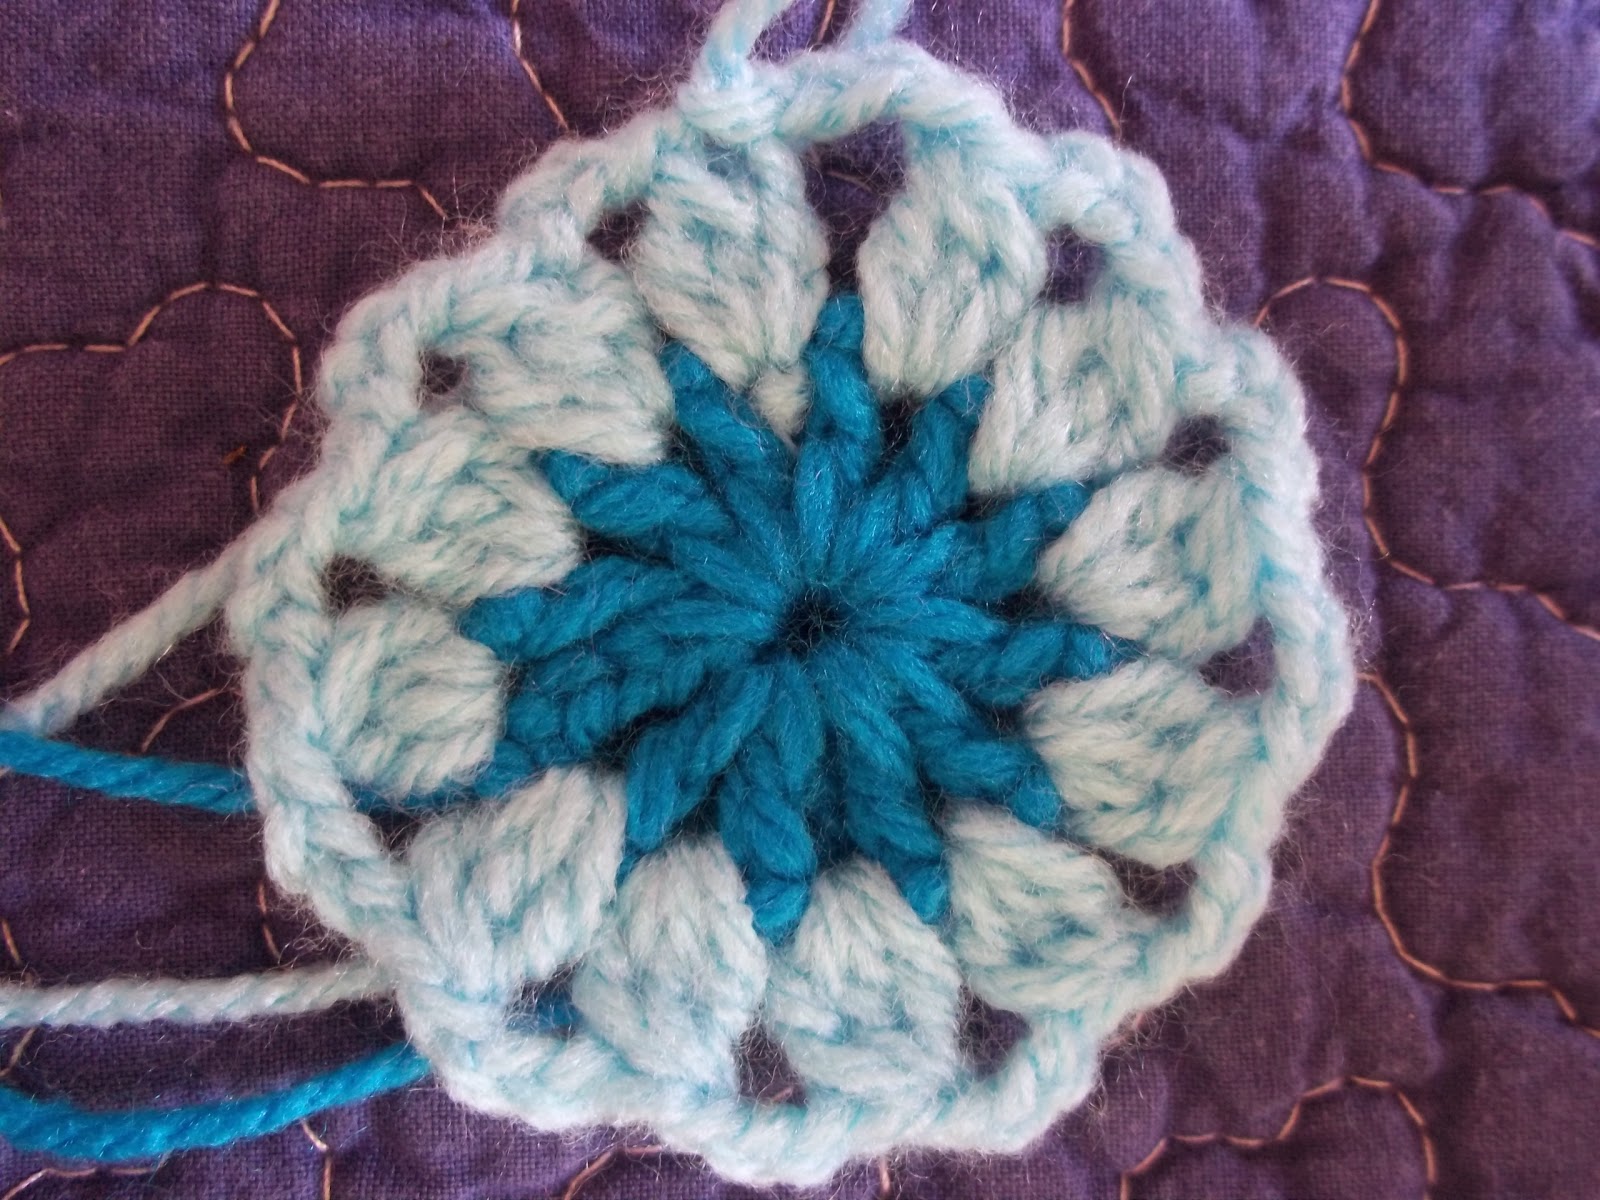 crochet mood blanket 2014